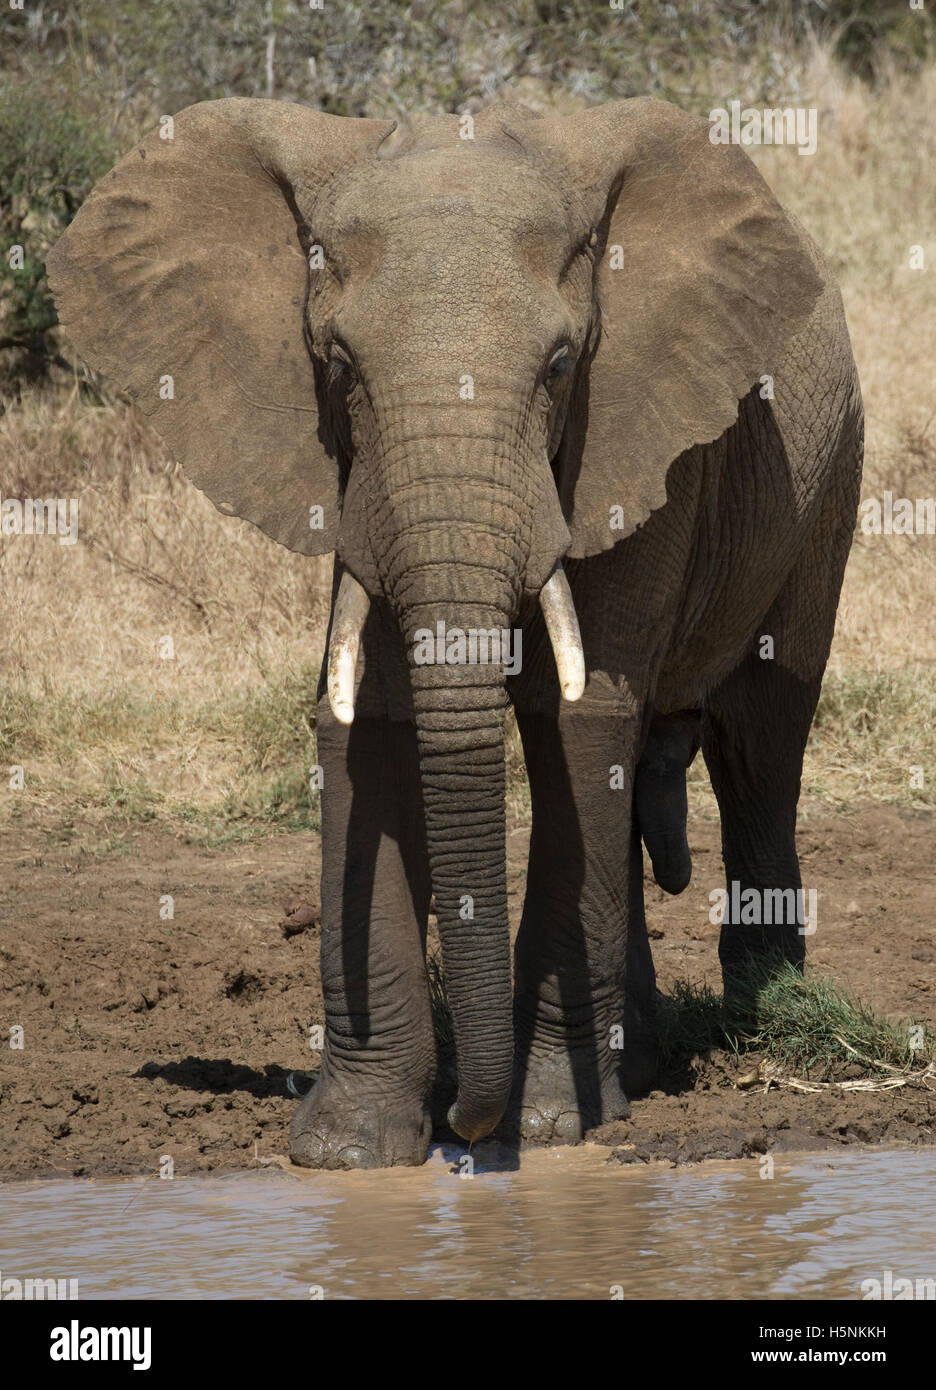 One elephant facing camera Loxodanta africana Laikipia plateau grasslands Kenya Stock Photo